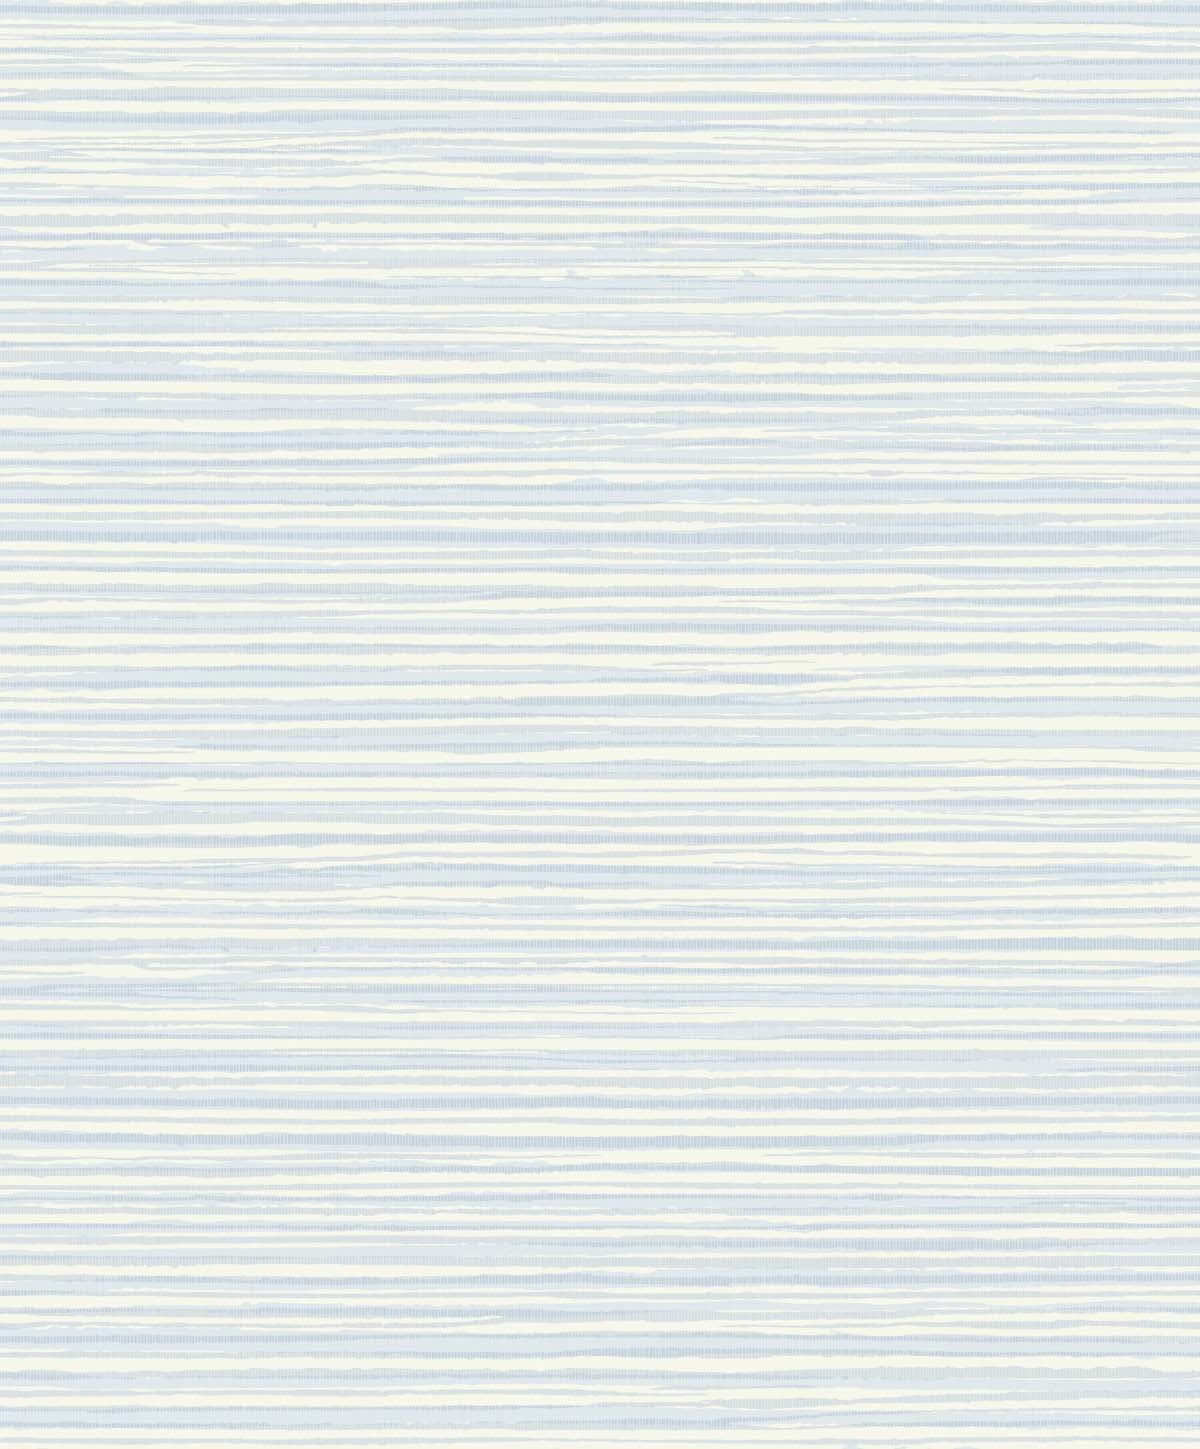 Seabrook The Simple Life Calm Seas Wallpaper - Blue Mist